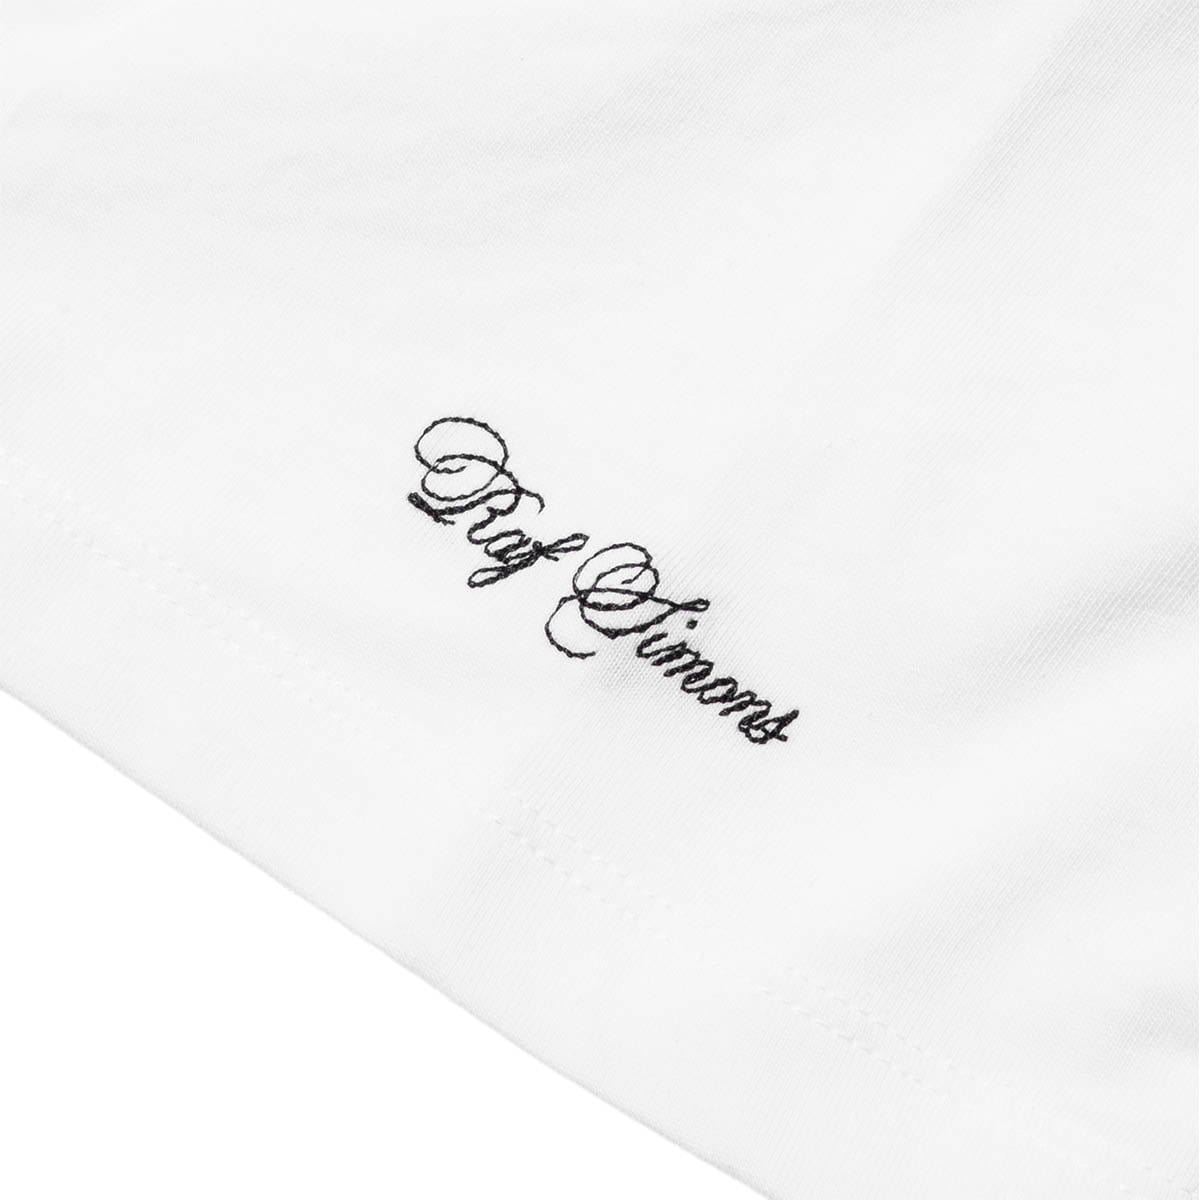 Fred Perry T-Shirts x Raf Simons PRINT YOKE T-SHIRT